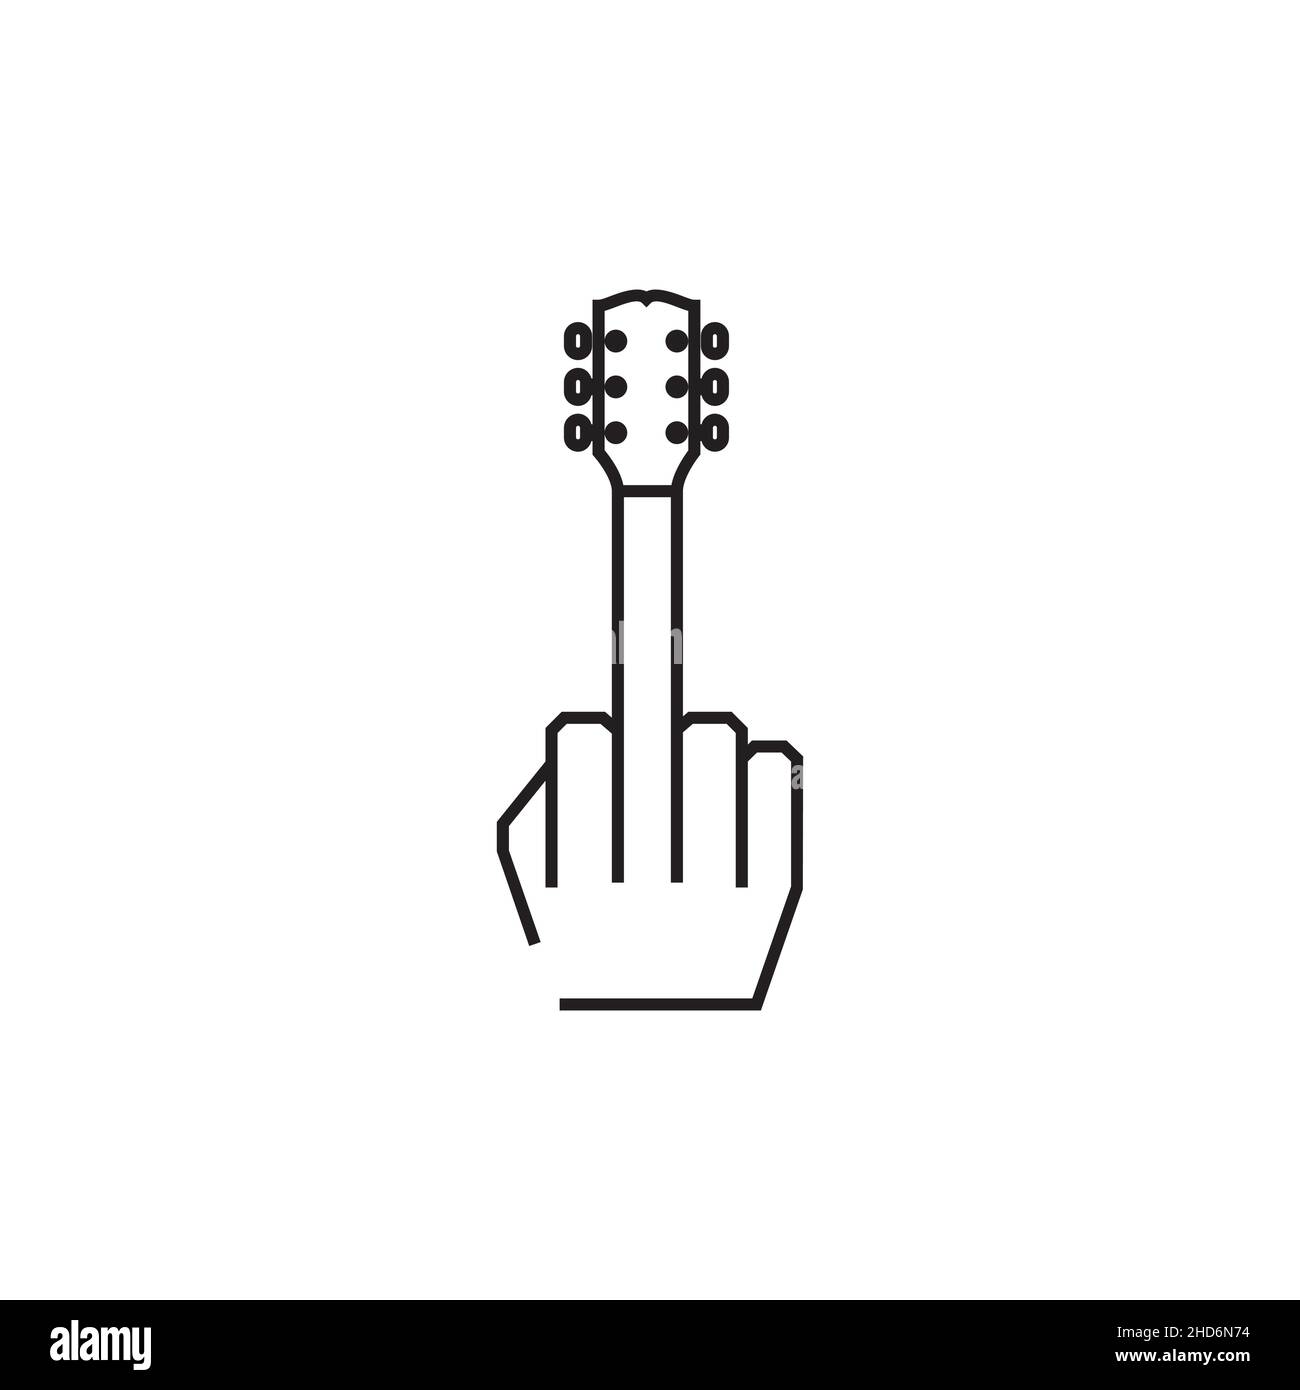 guitar with finger logo design vector graphic symbol icon illustration creative idea Stock Vector